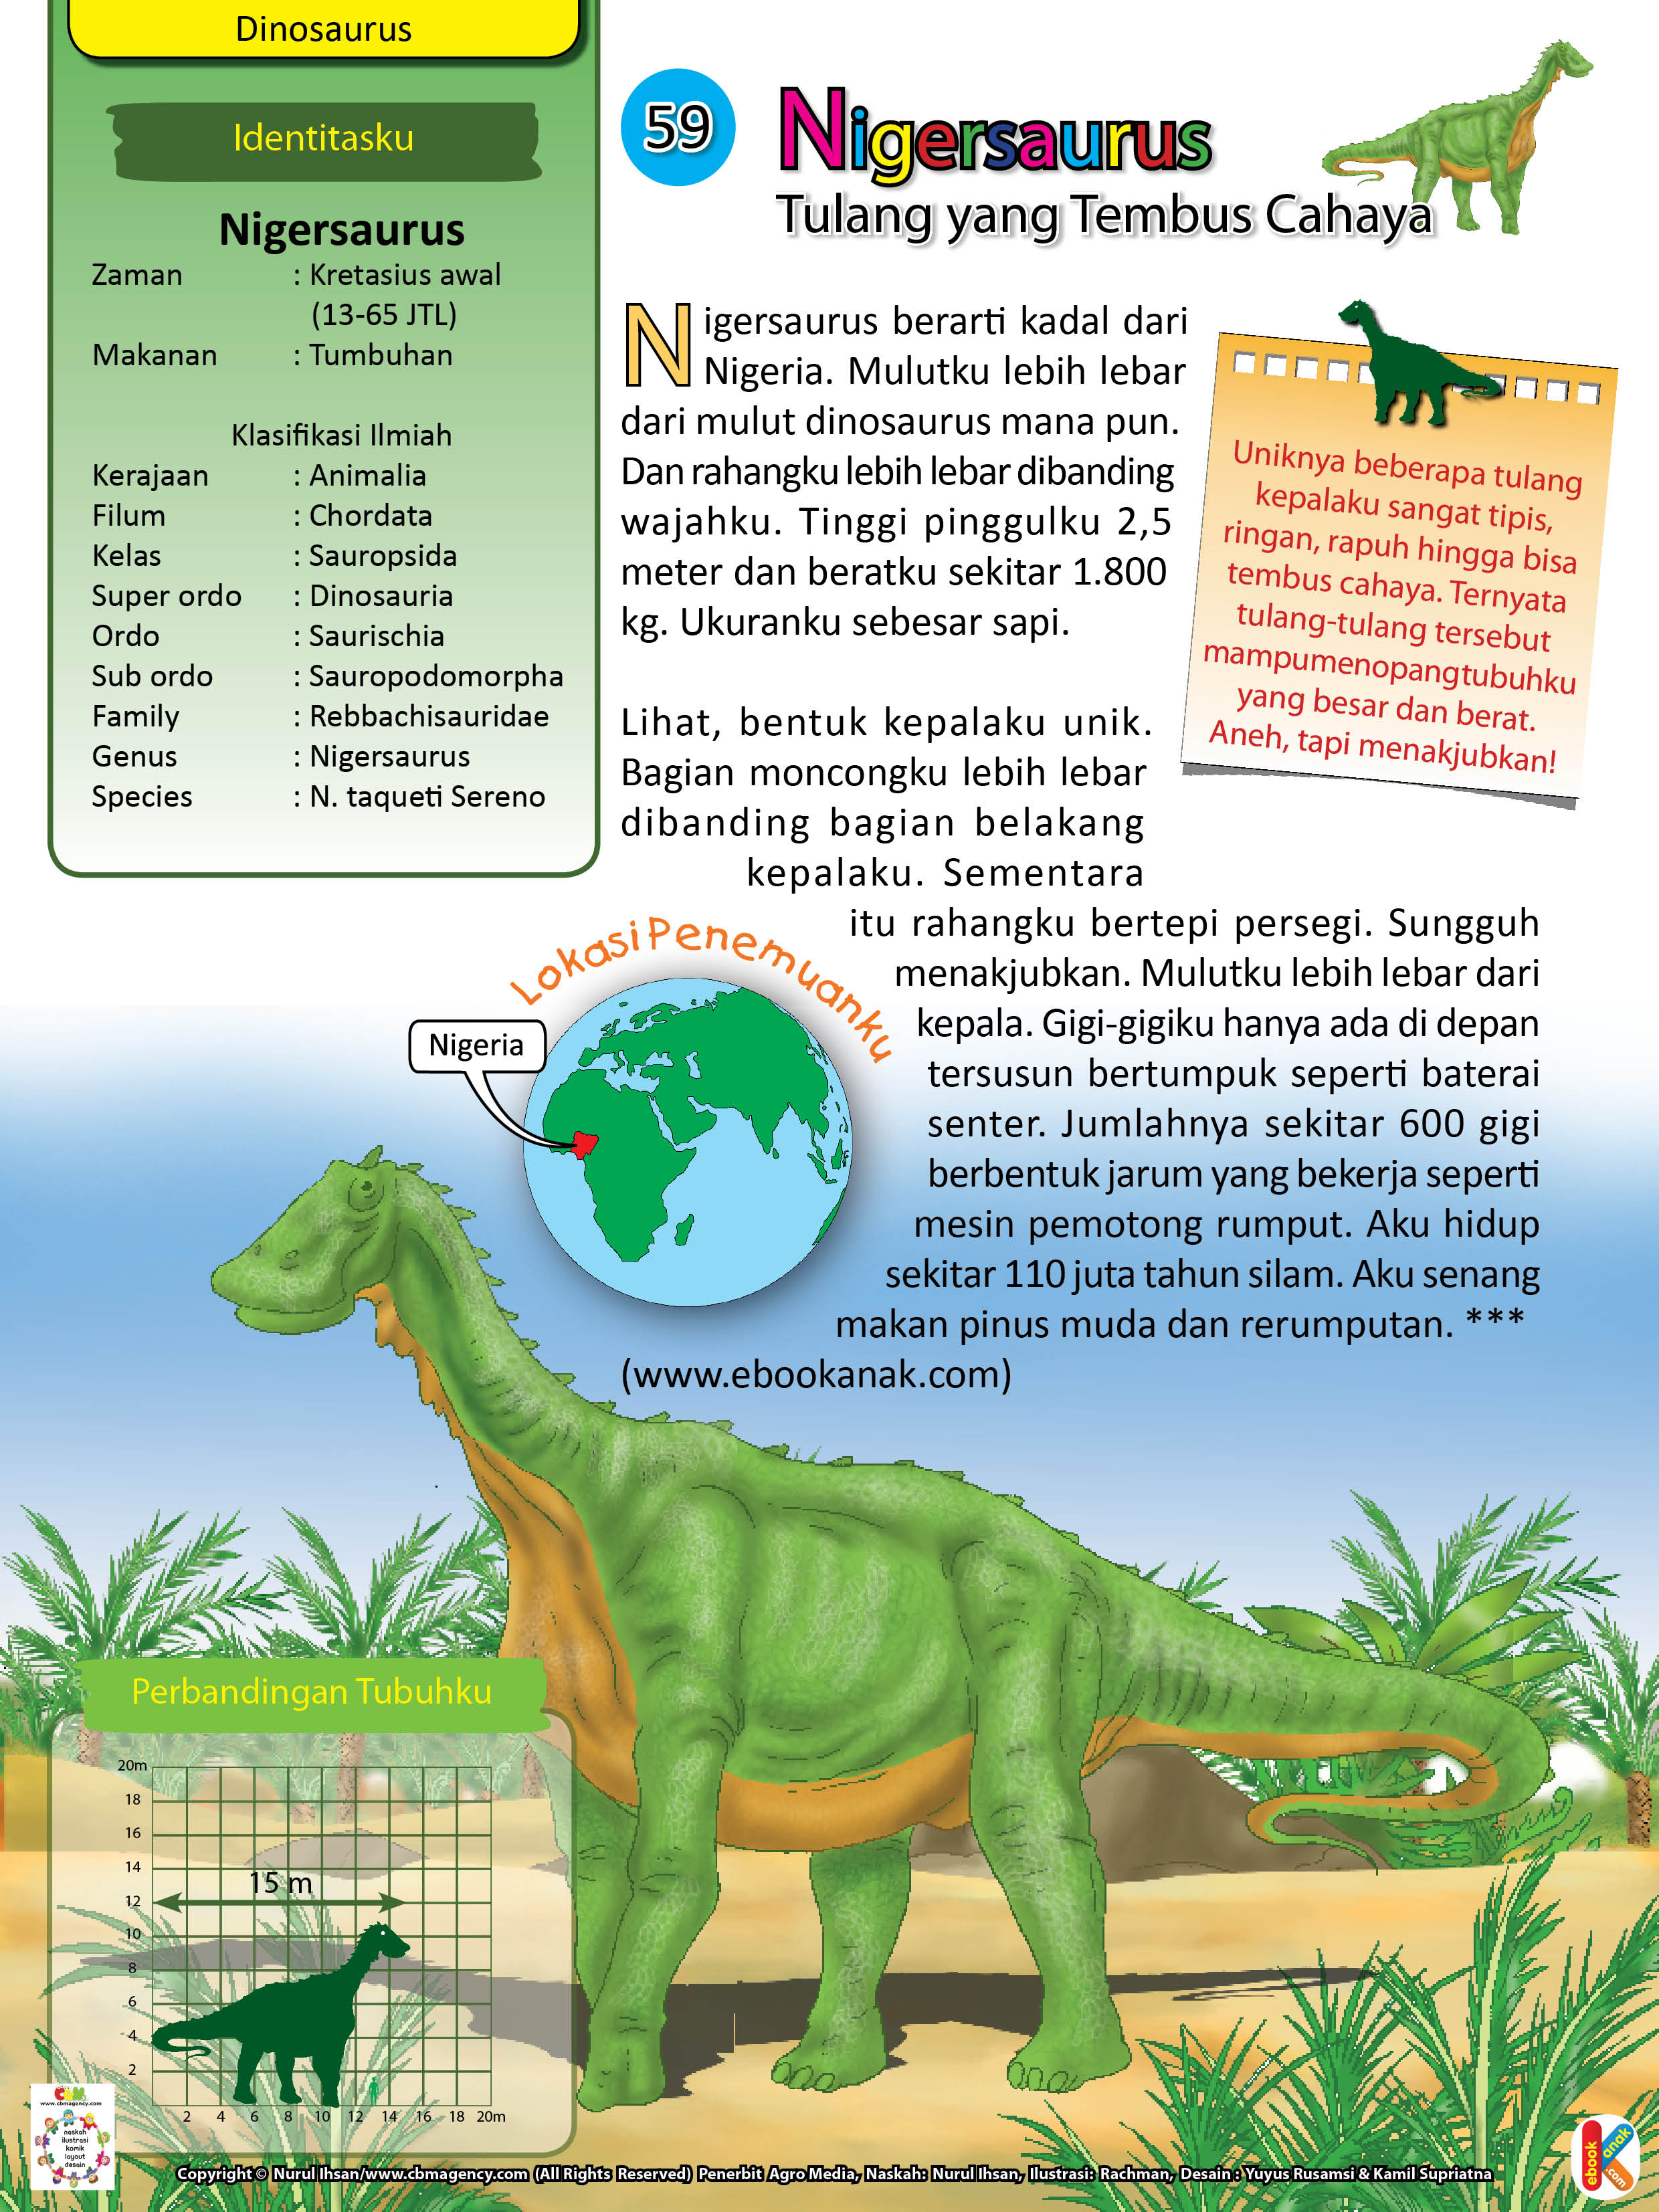 Nigersaurus hidup sekitar 110 juta tahun silam.